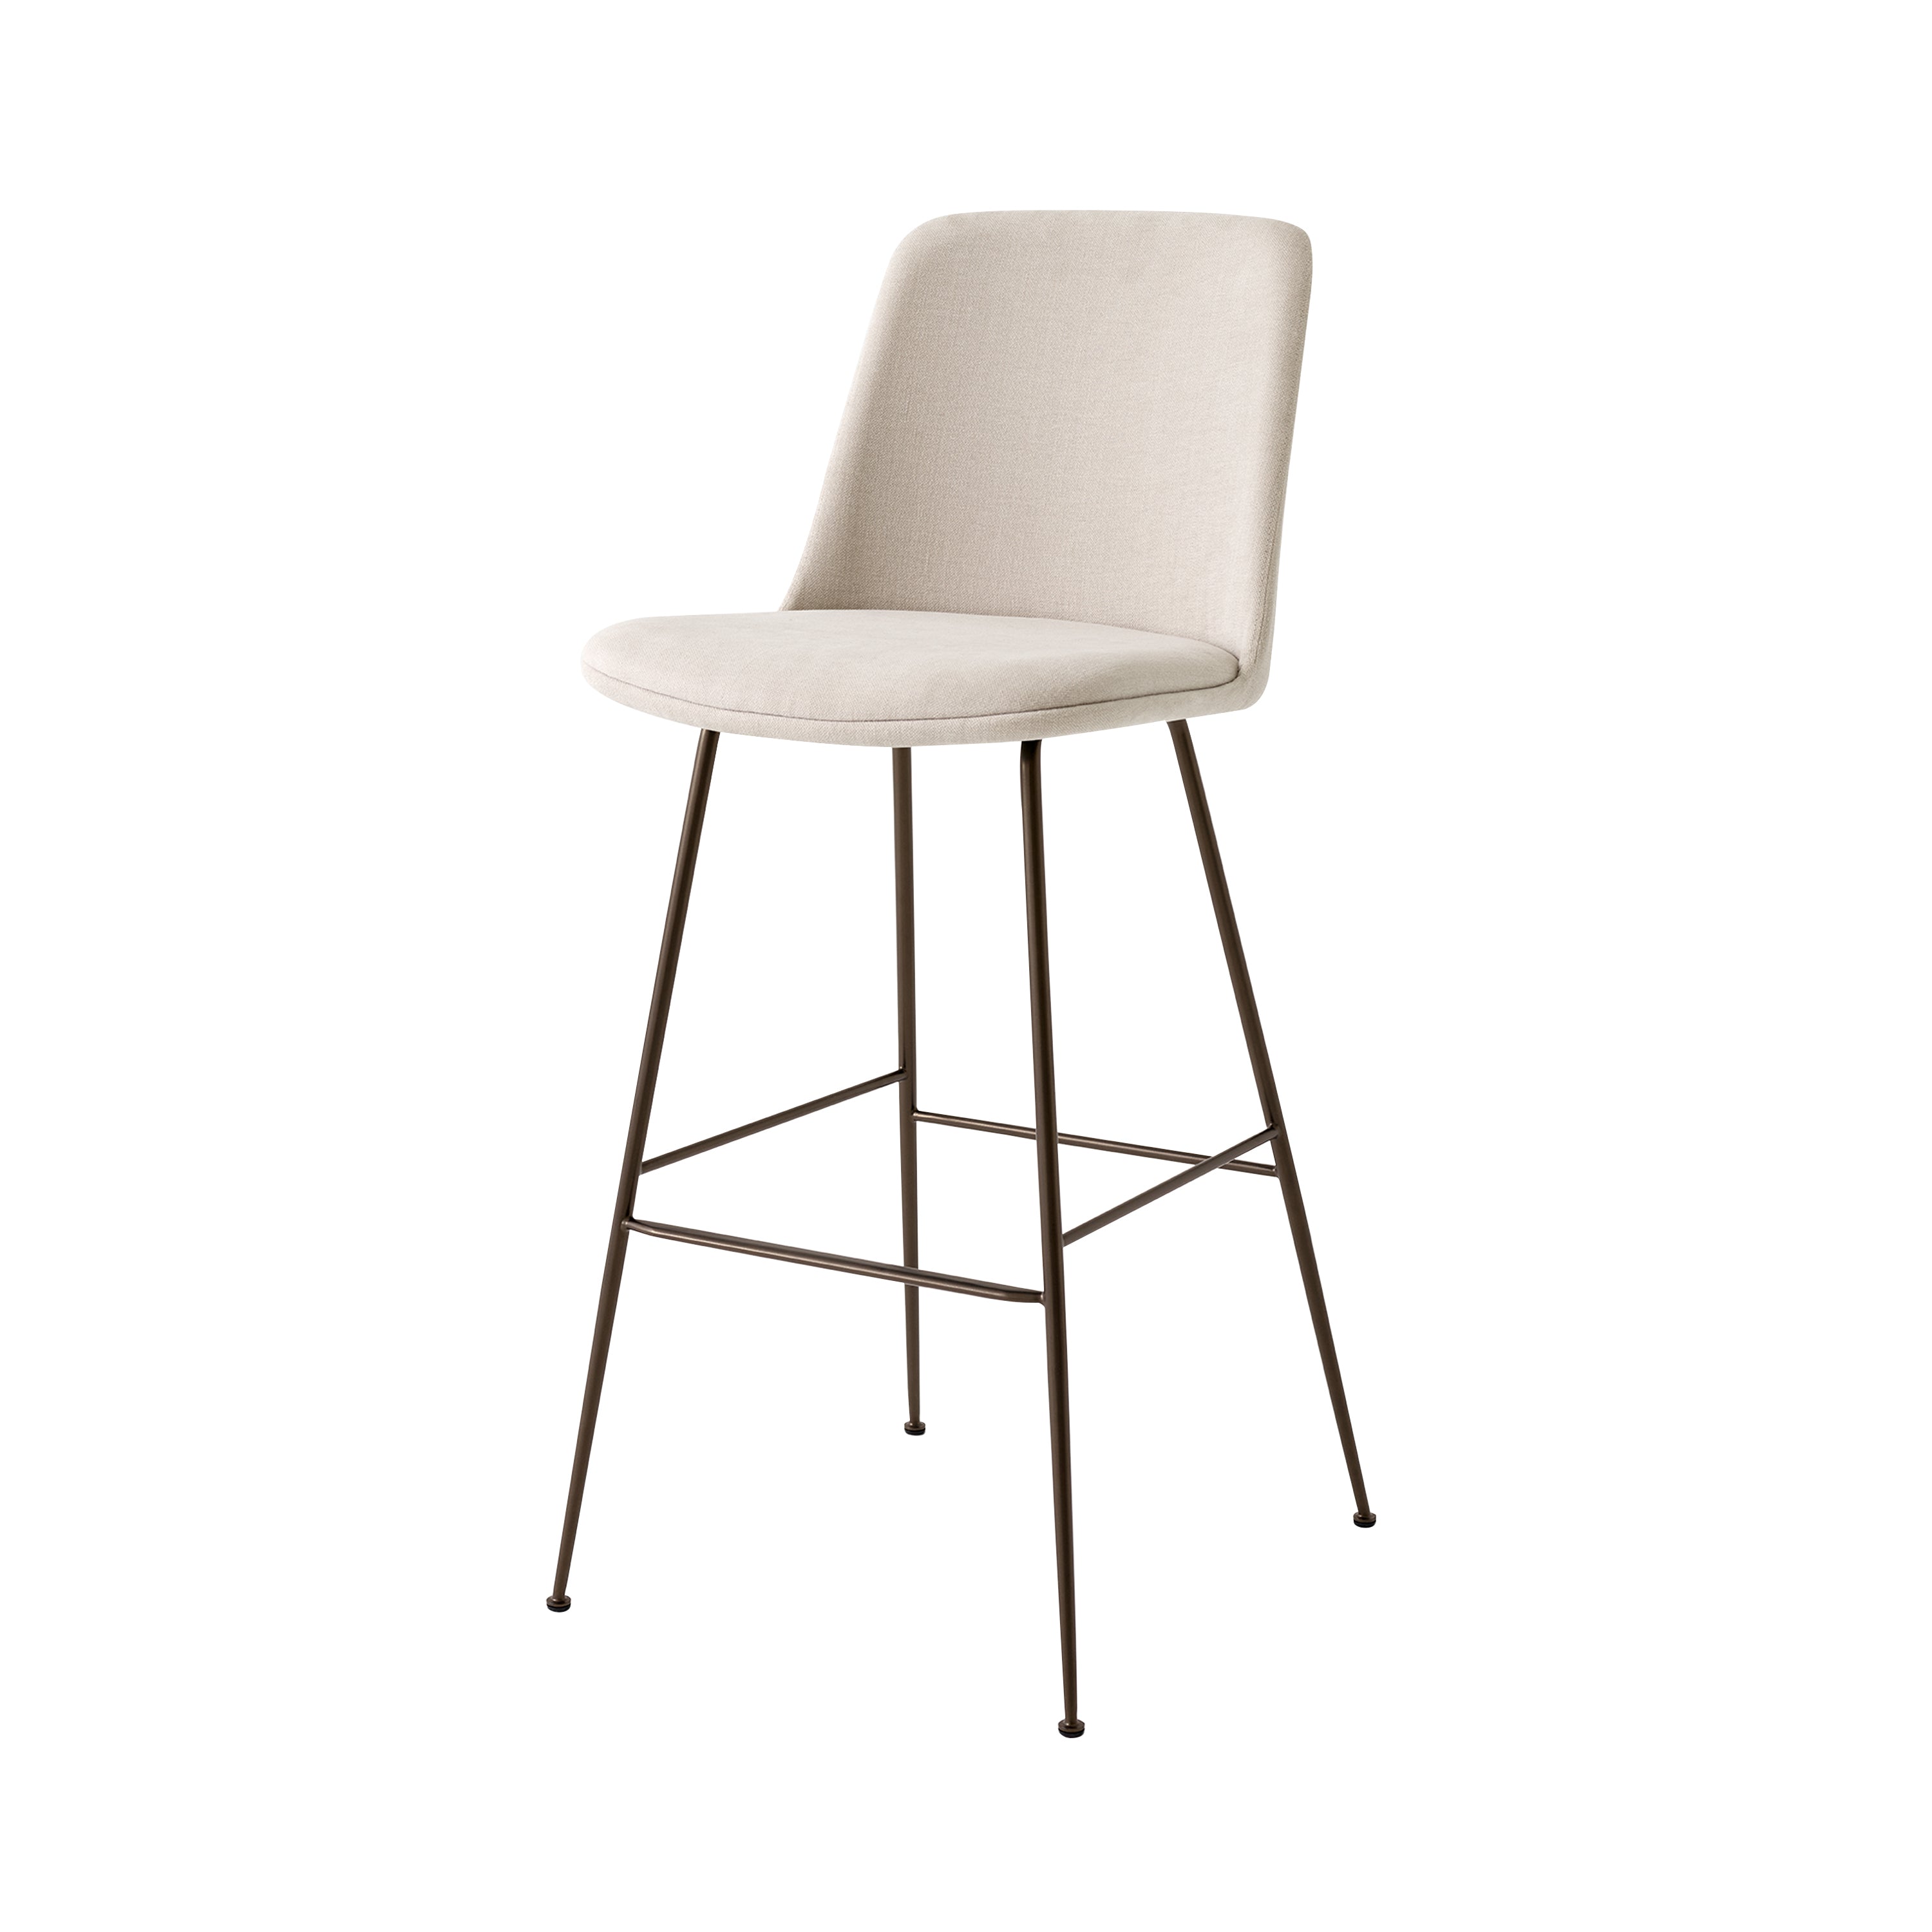 Rely Bar + Counter Highback Chair: HW94 + HW99 + Bar (HW99) + Bronzed